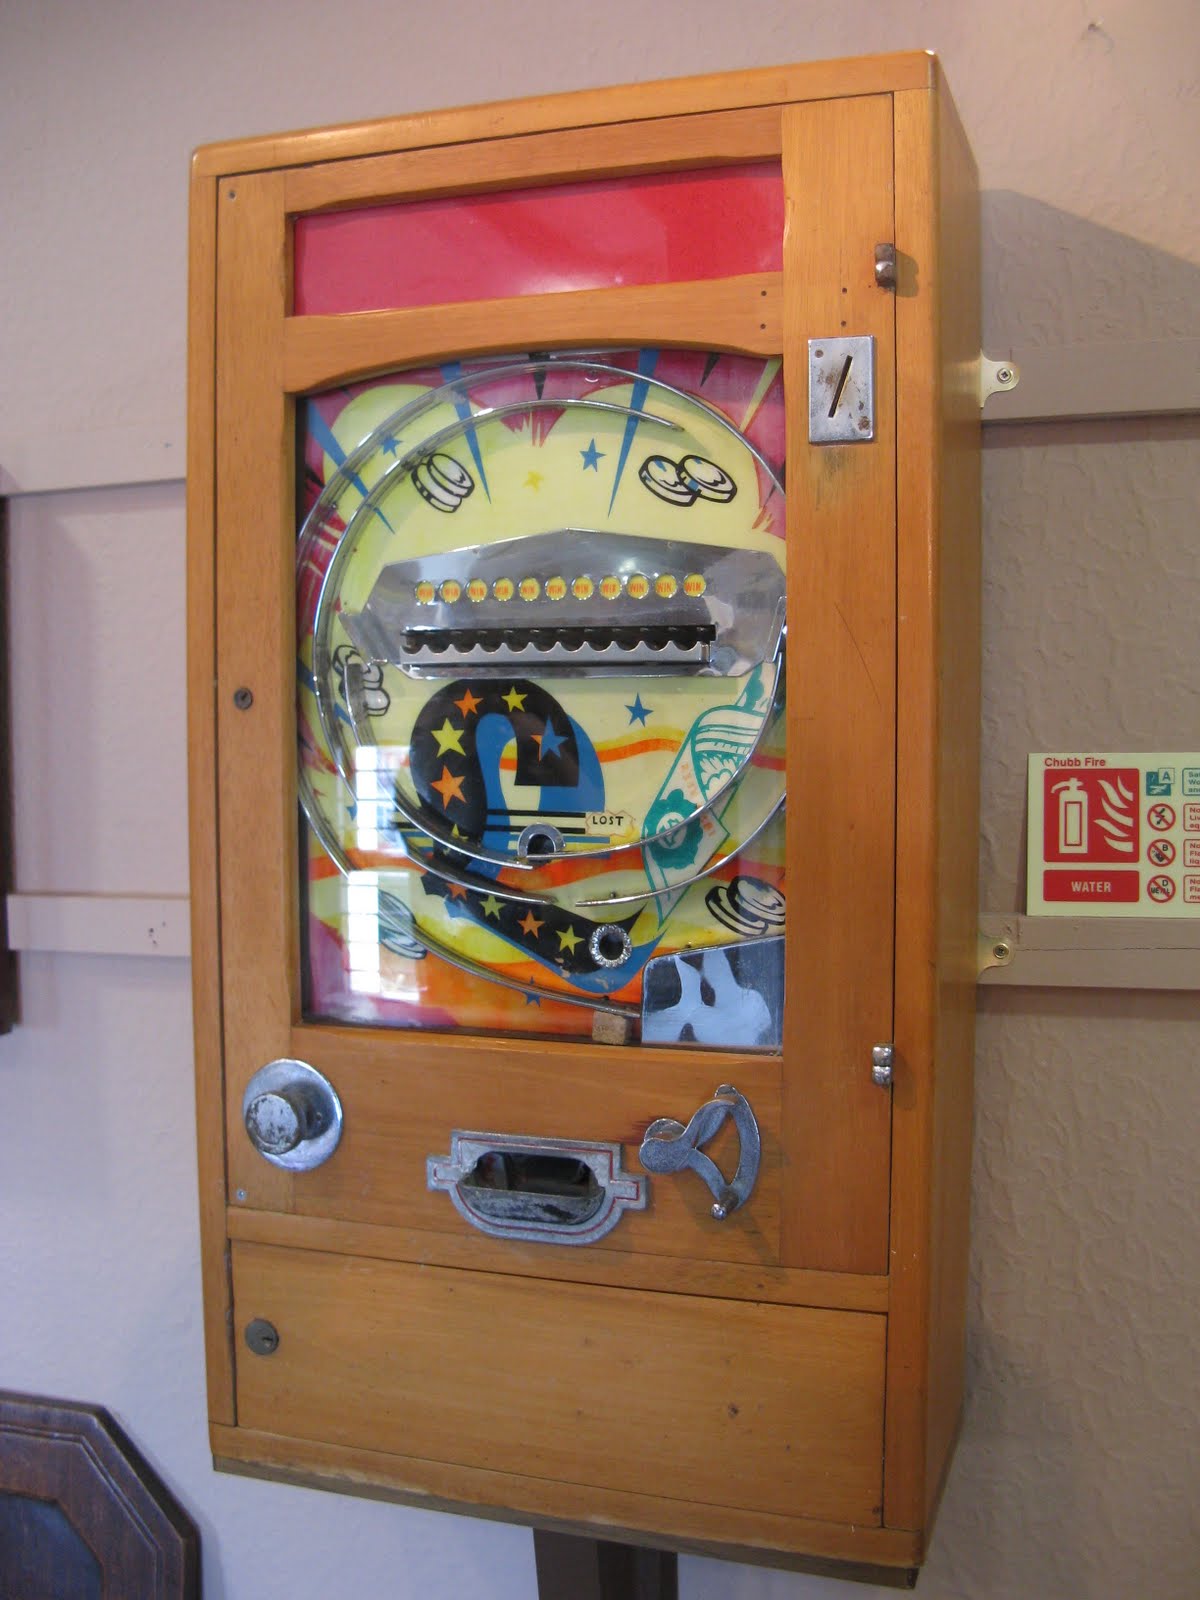 Online penny slot machines